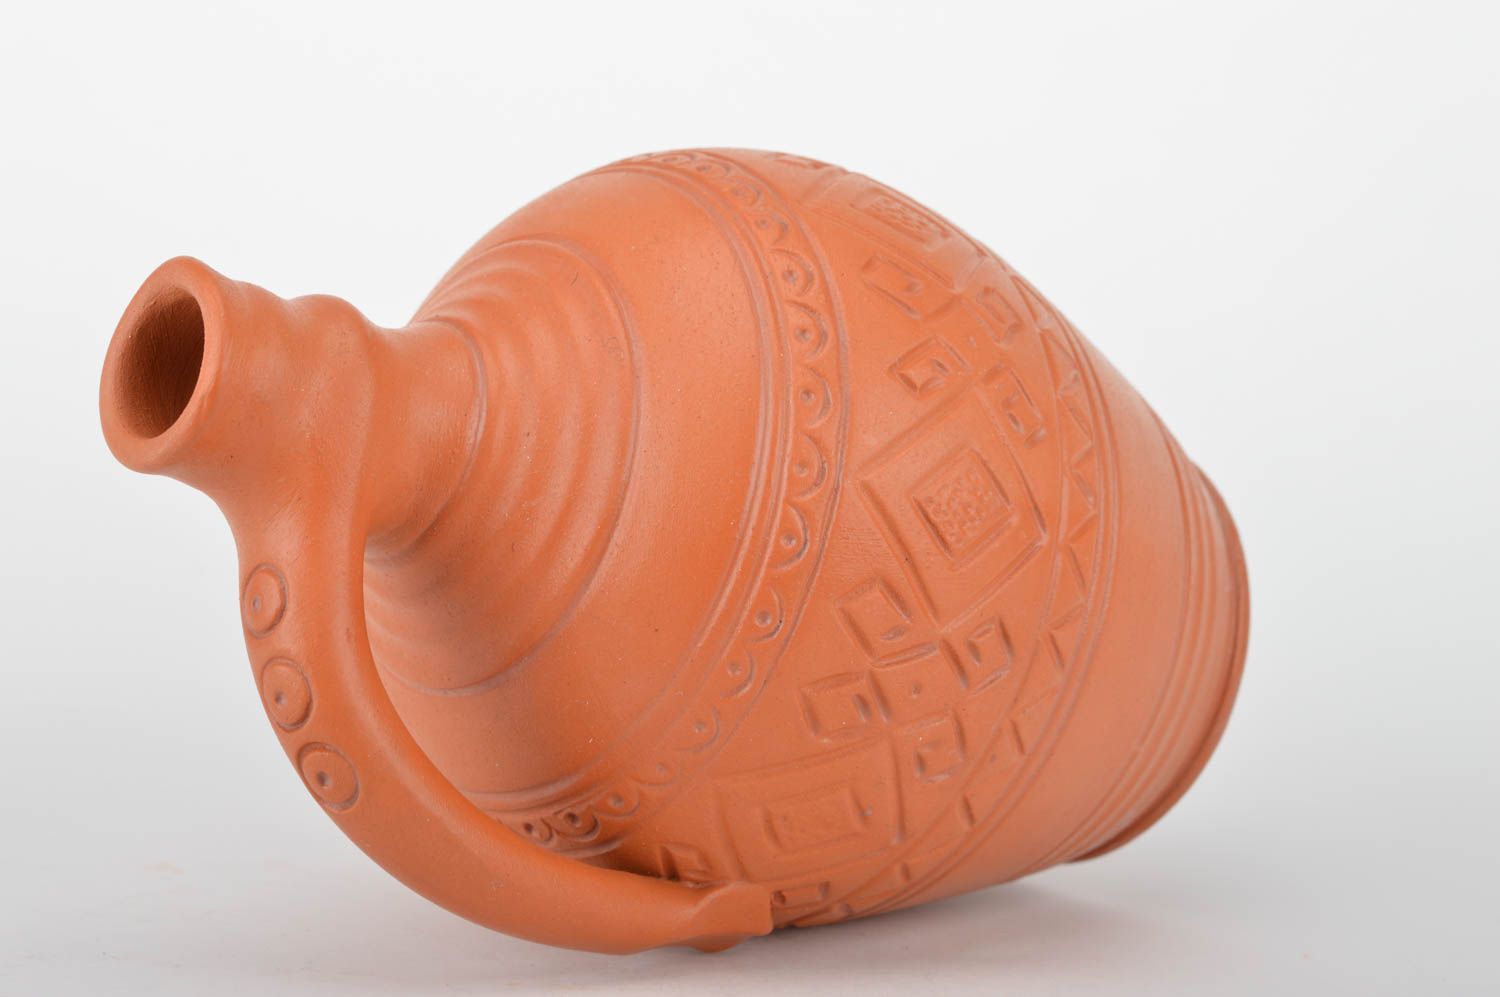 12 oz ceramic terracotta color wine bottle shape carafe with handle 2 lb photo 5